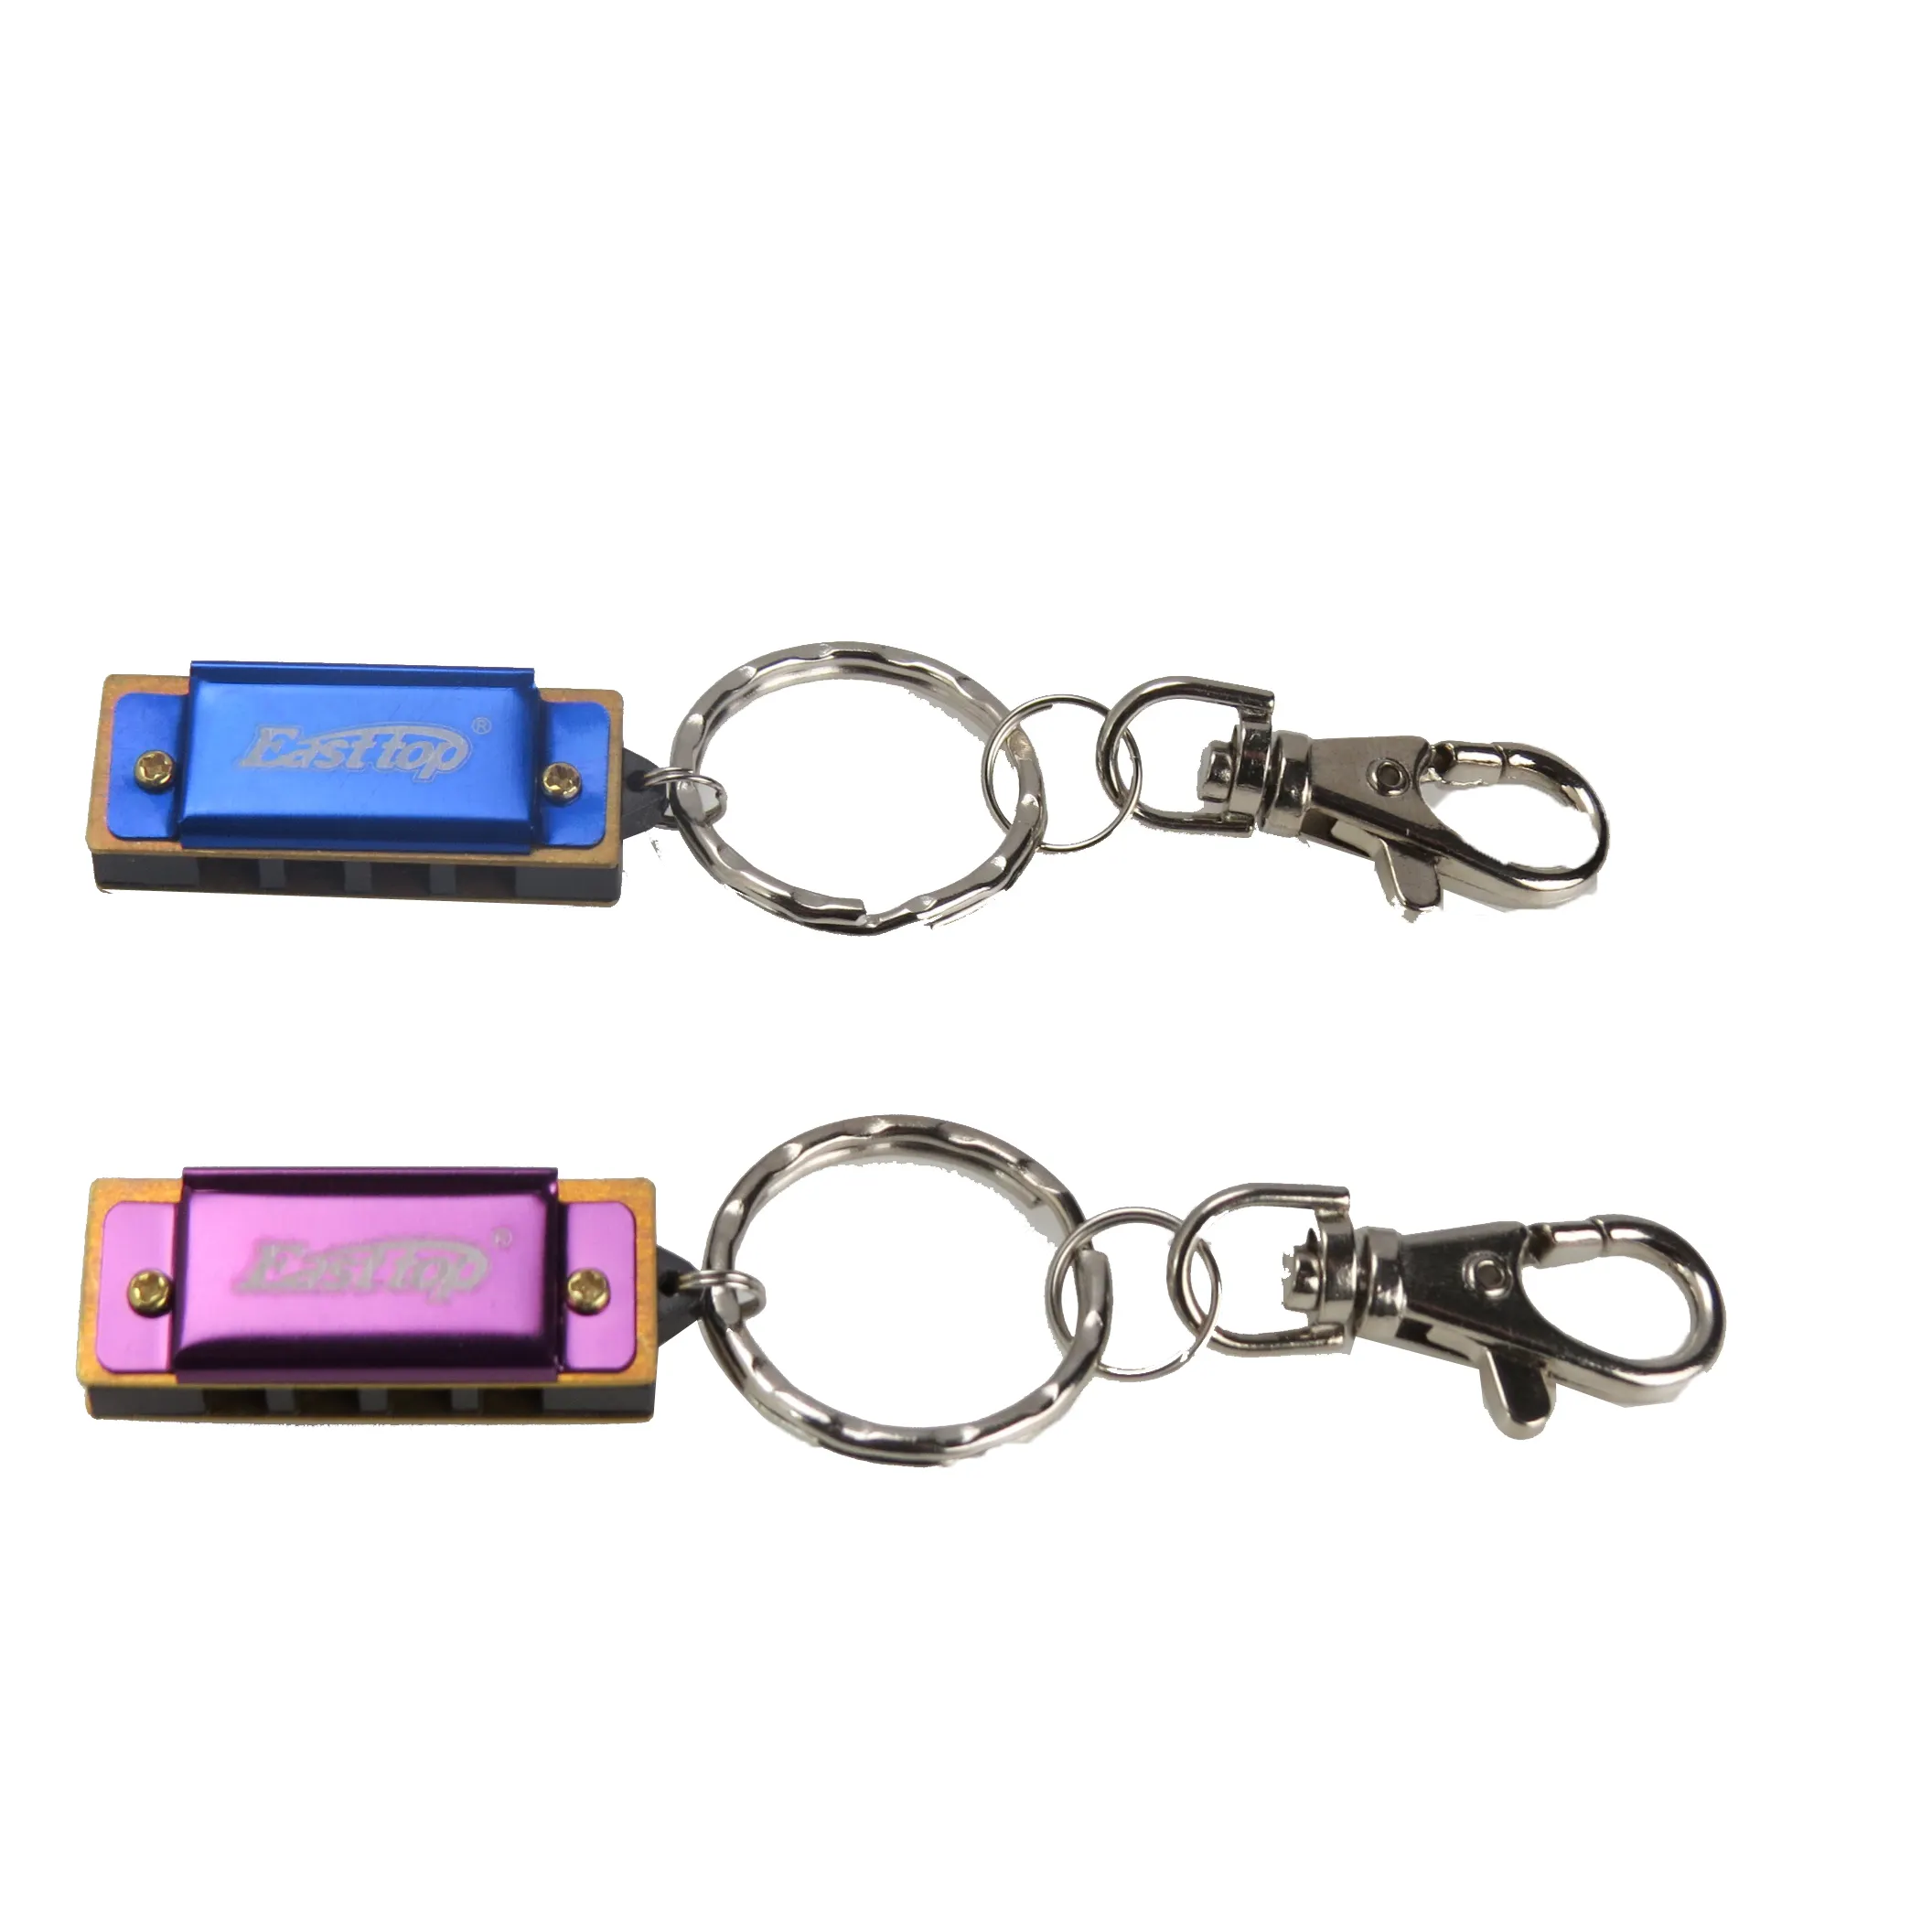 Black Rcool New Cute Mini Simulation Camera Charm Keyring Hanging Handbag Cell Phone Car Key Chain Pendant Ornament with Flash Light&Sound Gift Keychain 